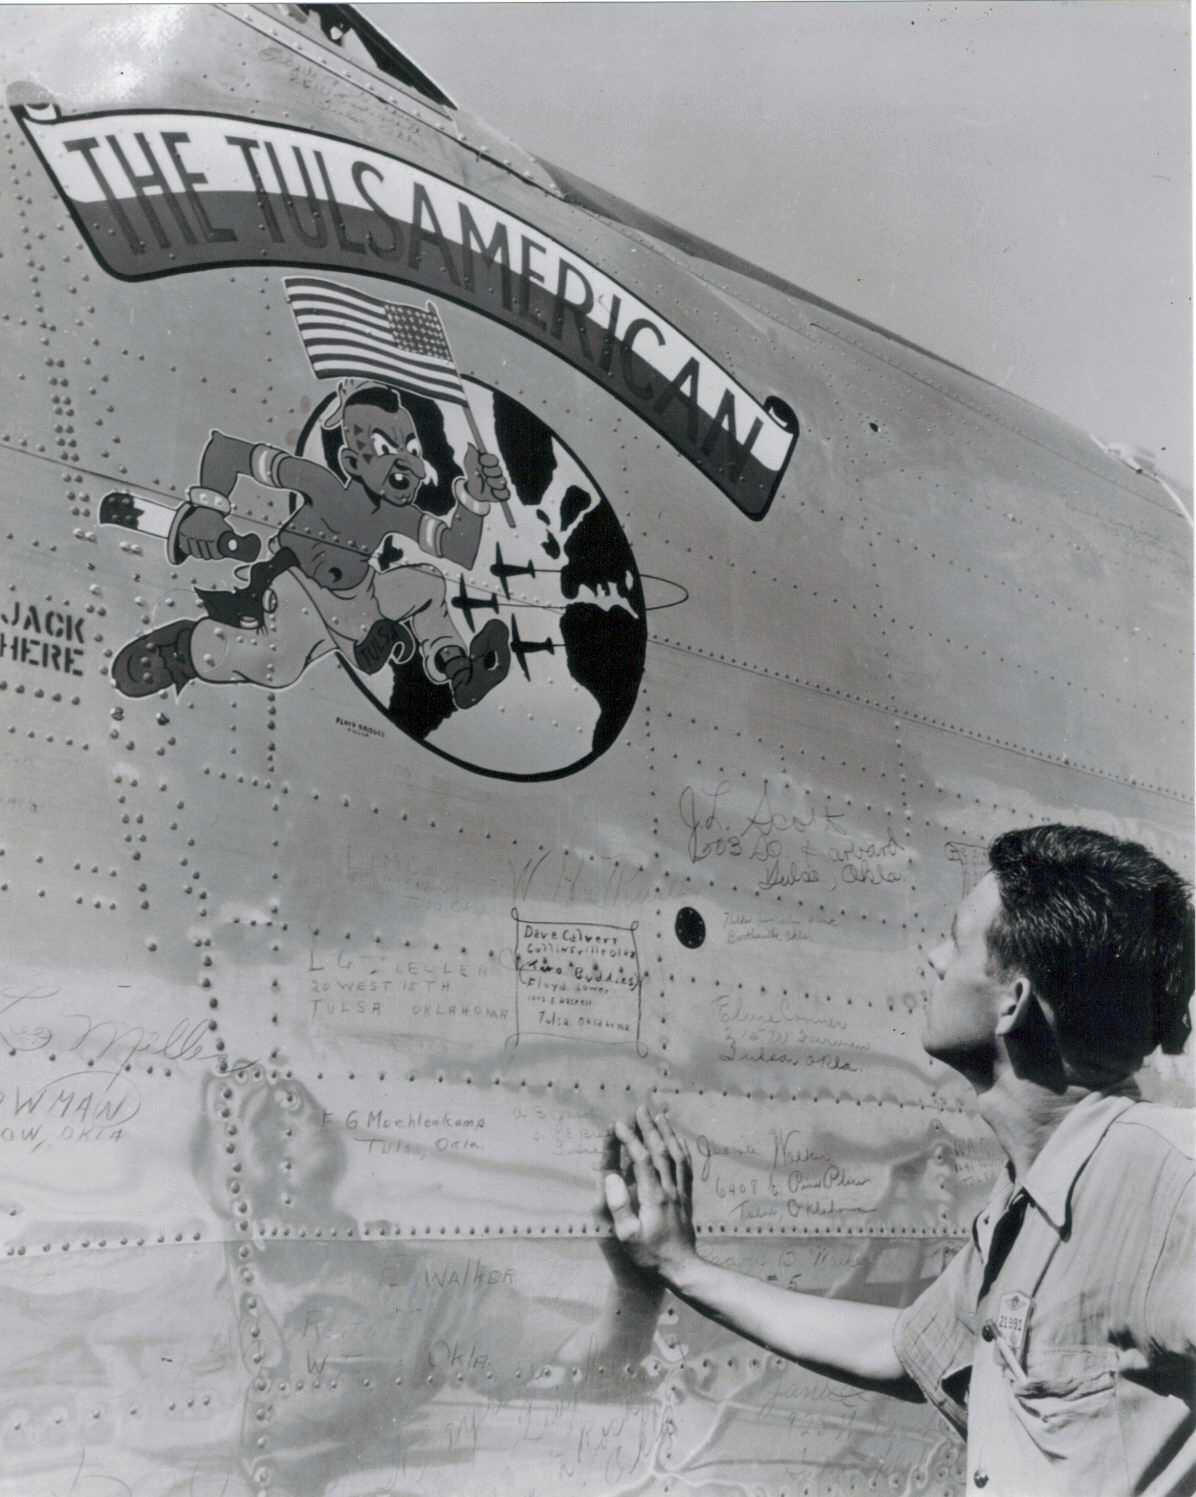 B-24 Nose Art of the Tulsamerican